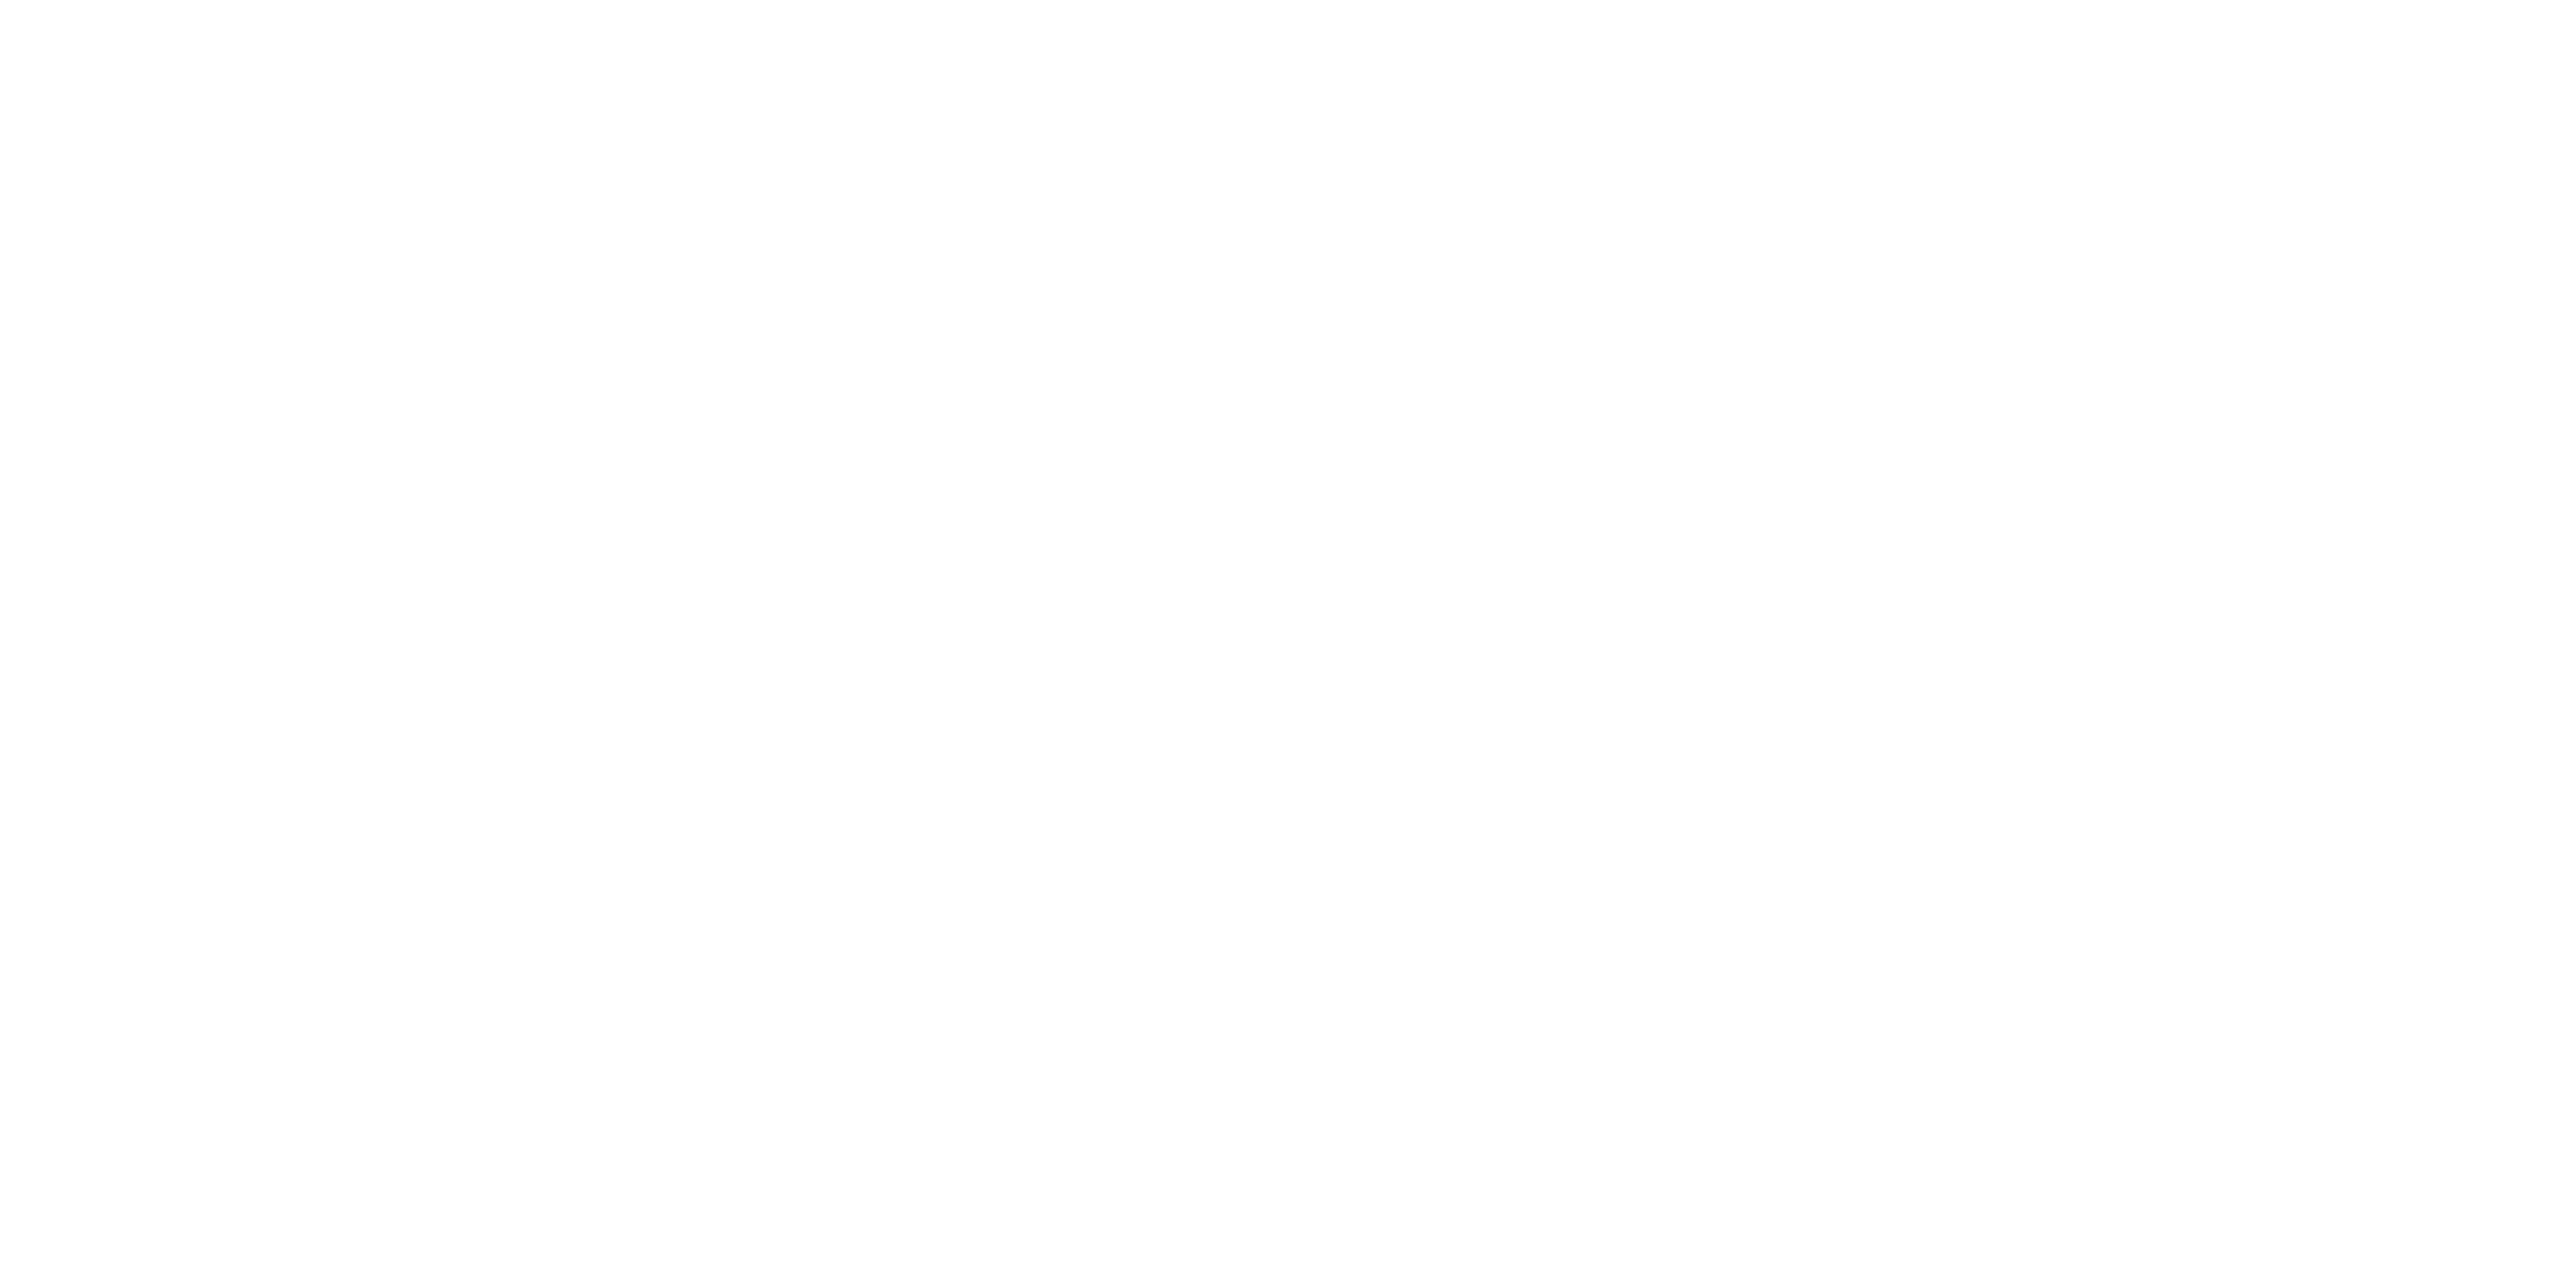 Blended Beauty USA